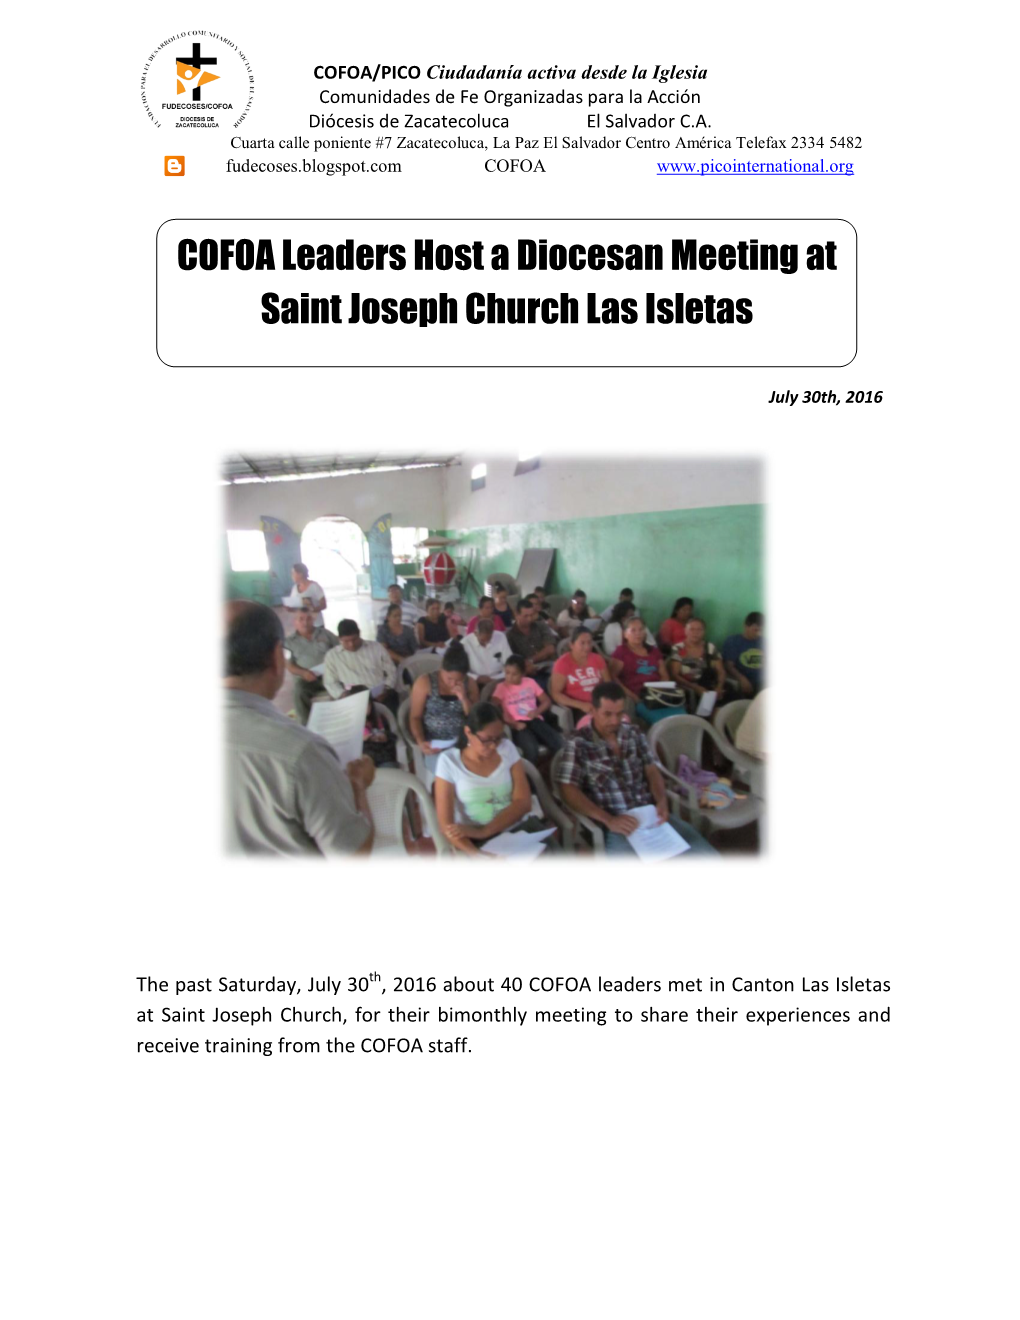 COFOA Leaders Host a Diocesan Meeting at Saint Joseph Church